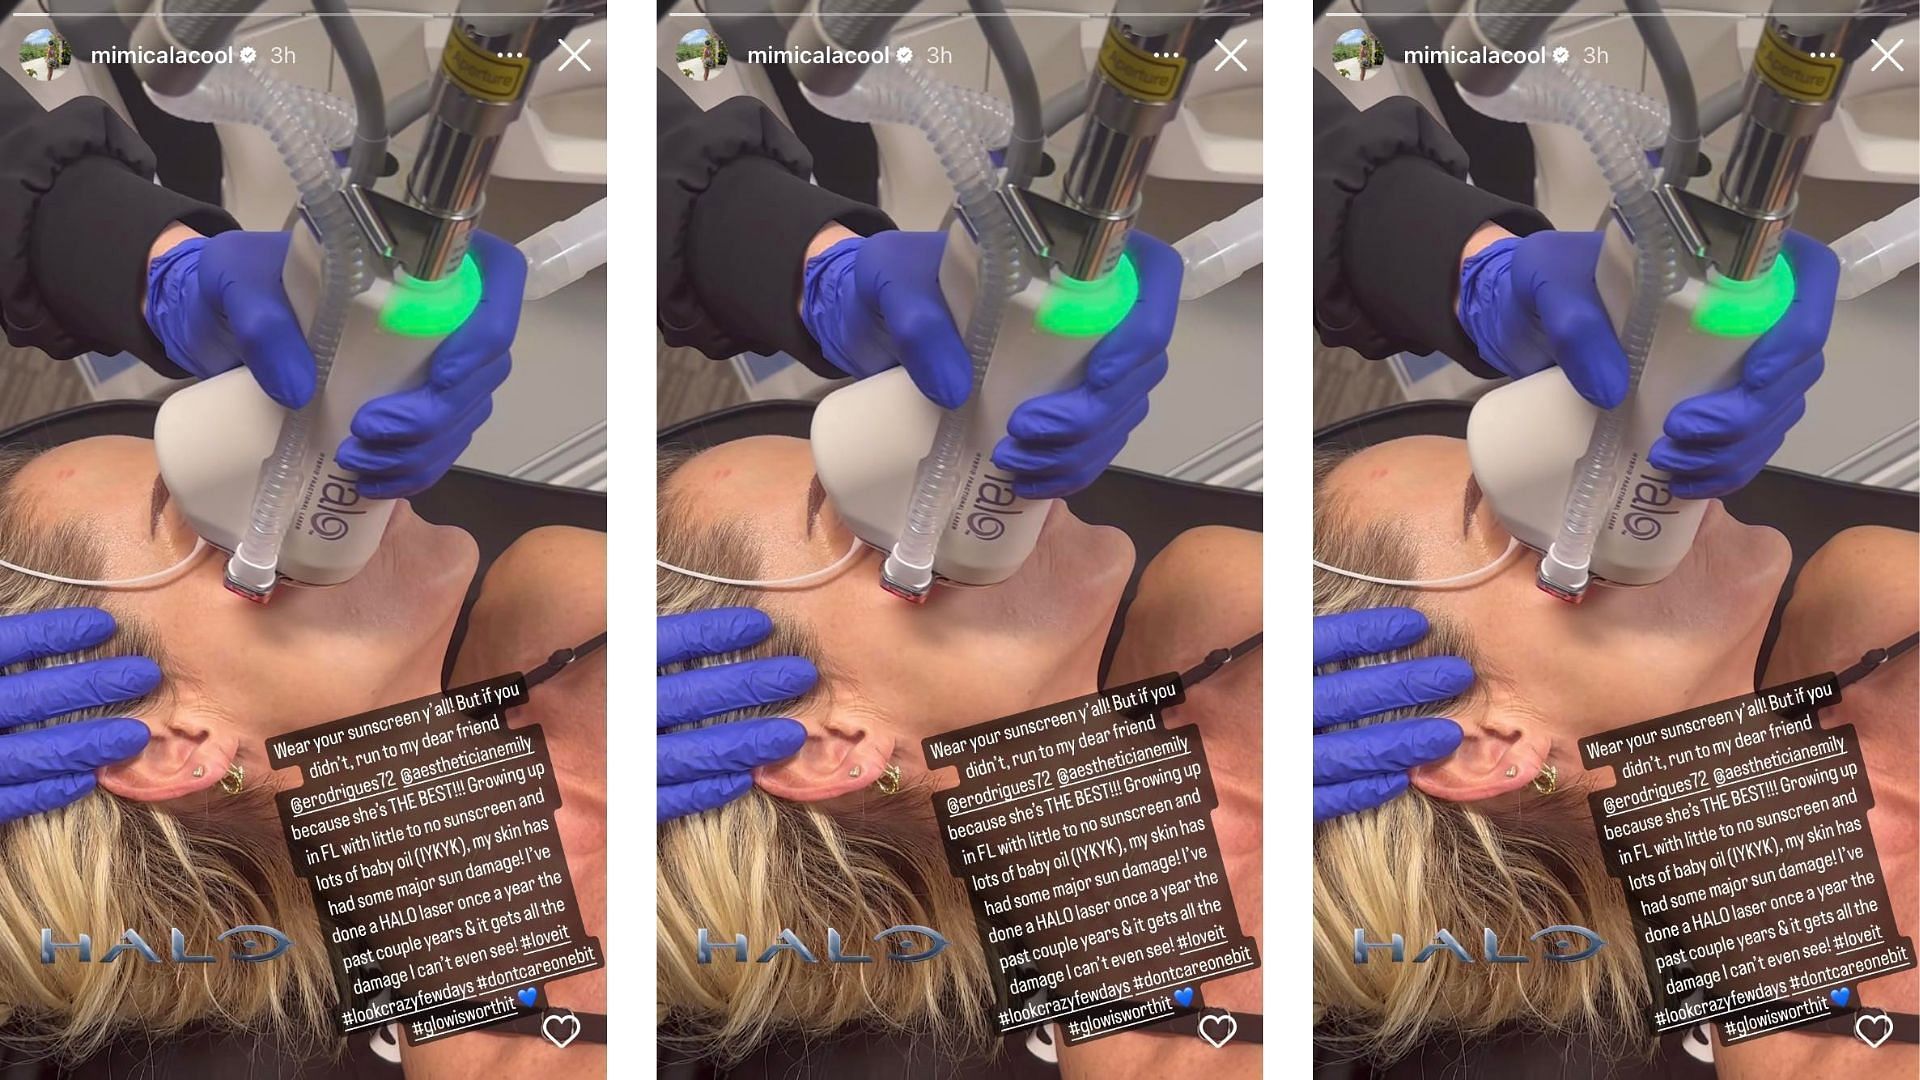 McCool shares video of brutal procedure on Instagram.